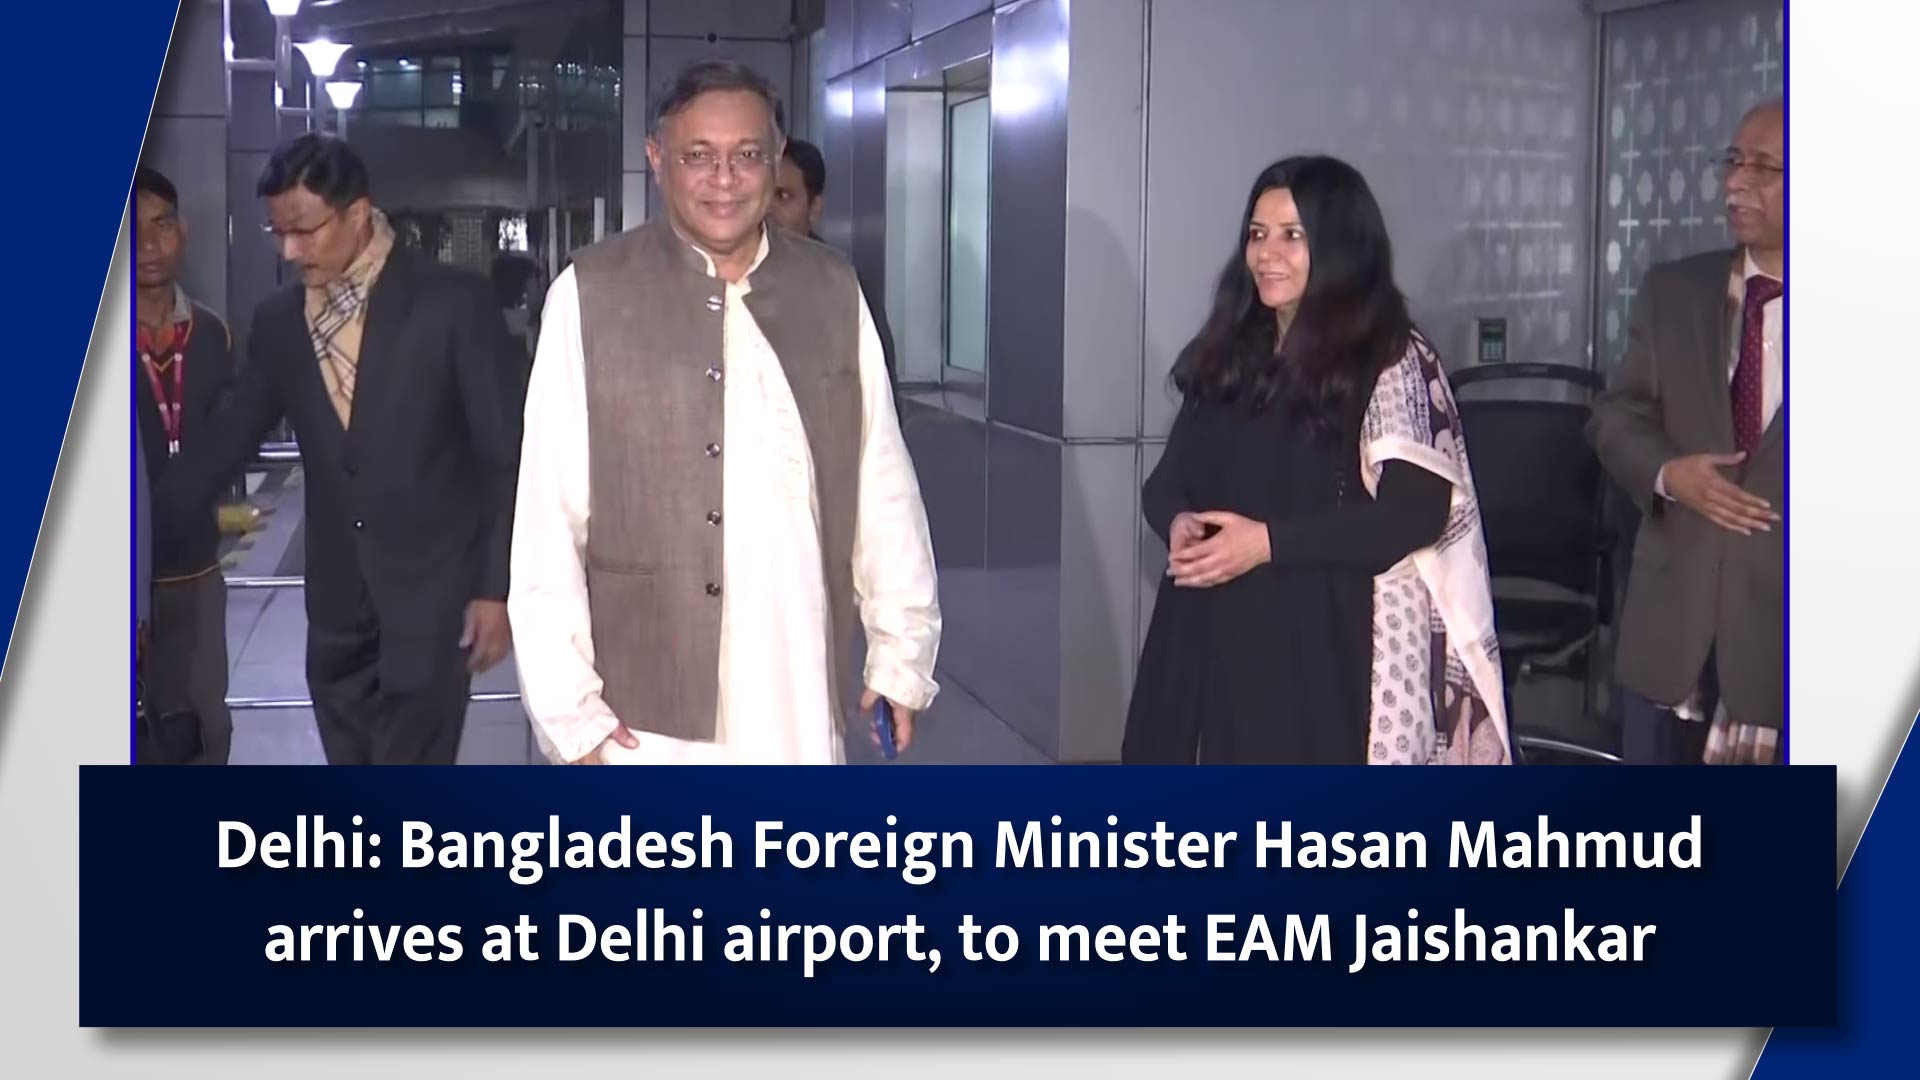 Bangladesh Foreign Minister Hasan Mahmud arrives in Delhi